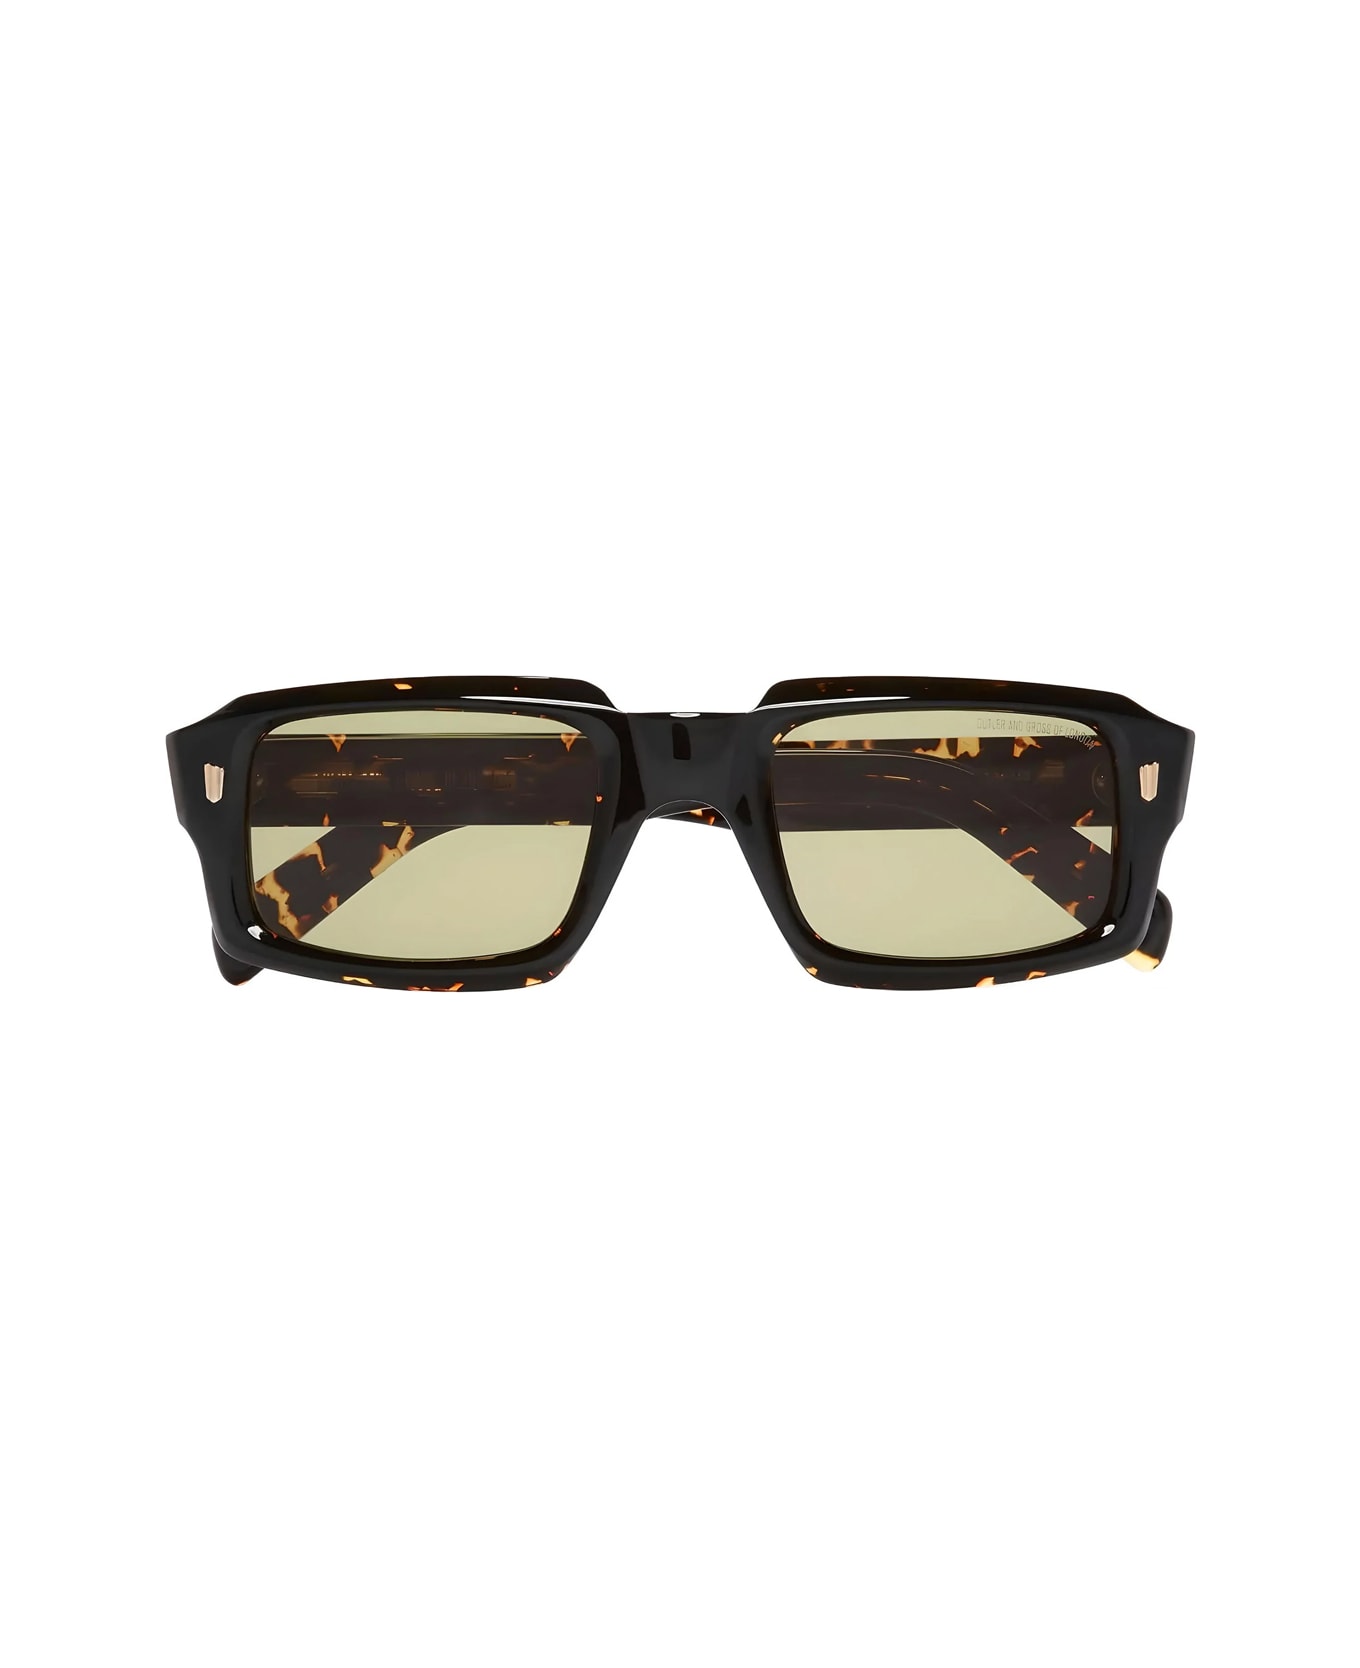 Cutler and Gross 9495 02 Black On Havana Sunglasses - Marrone サングラス